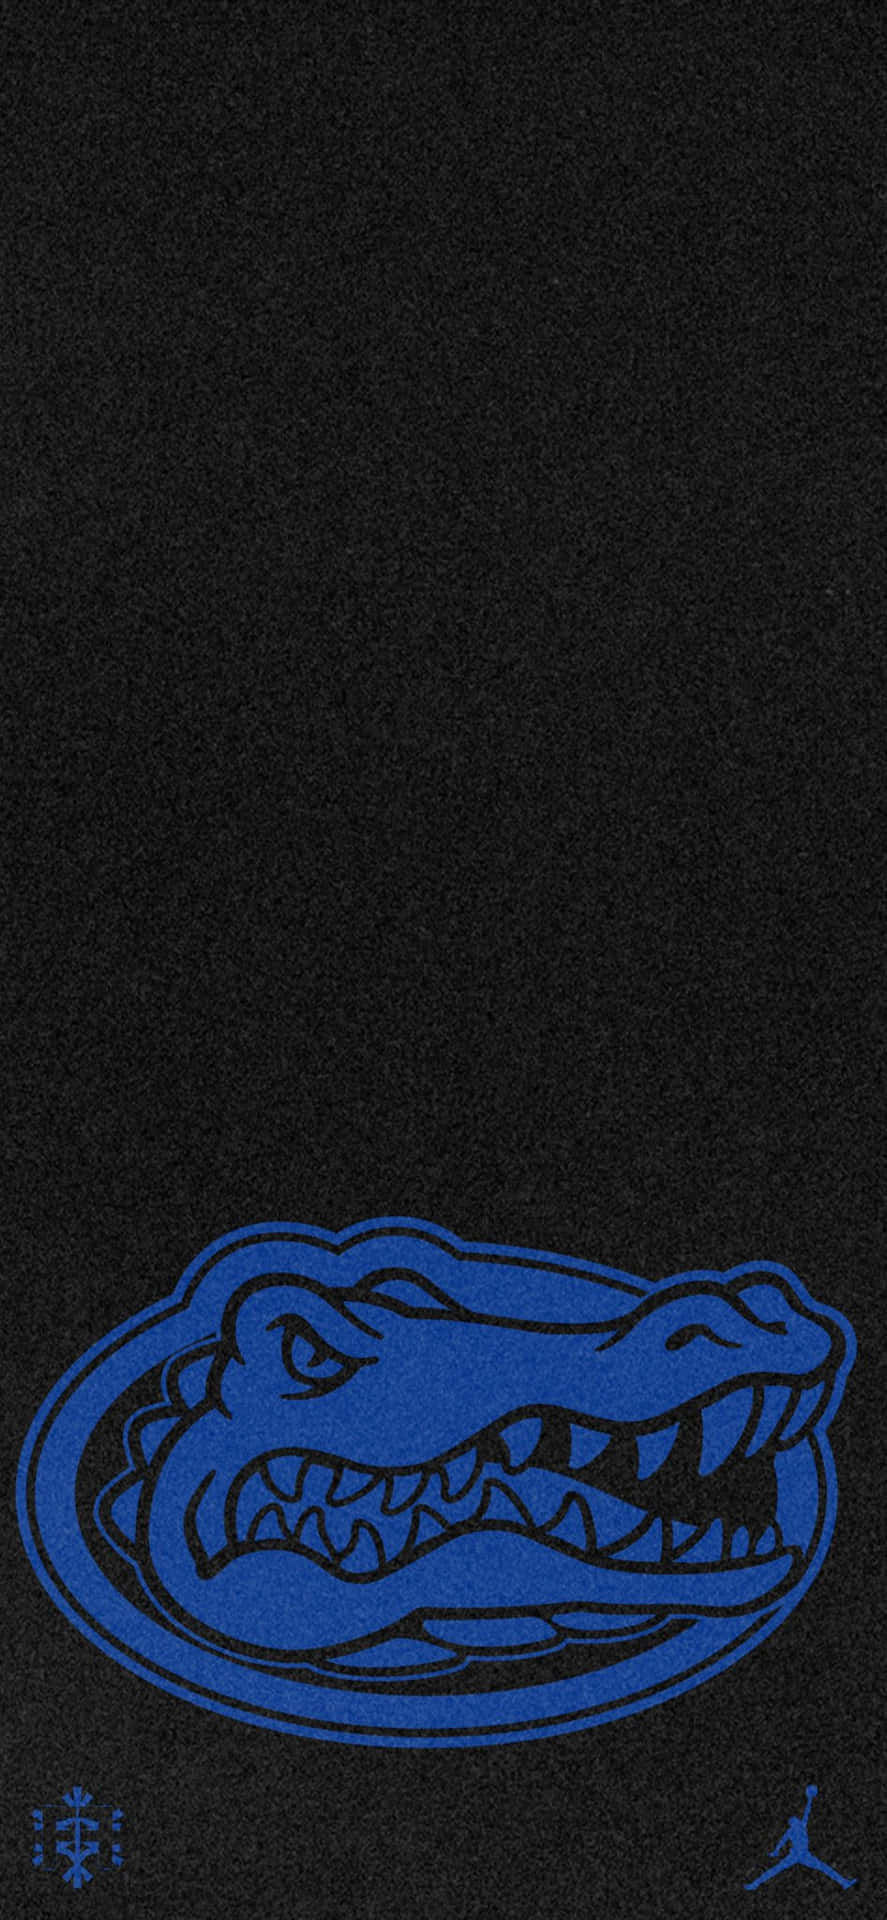 A Black And Blue Gator Logo On A Black Background Wallpaper